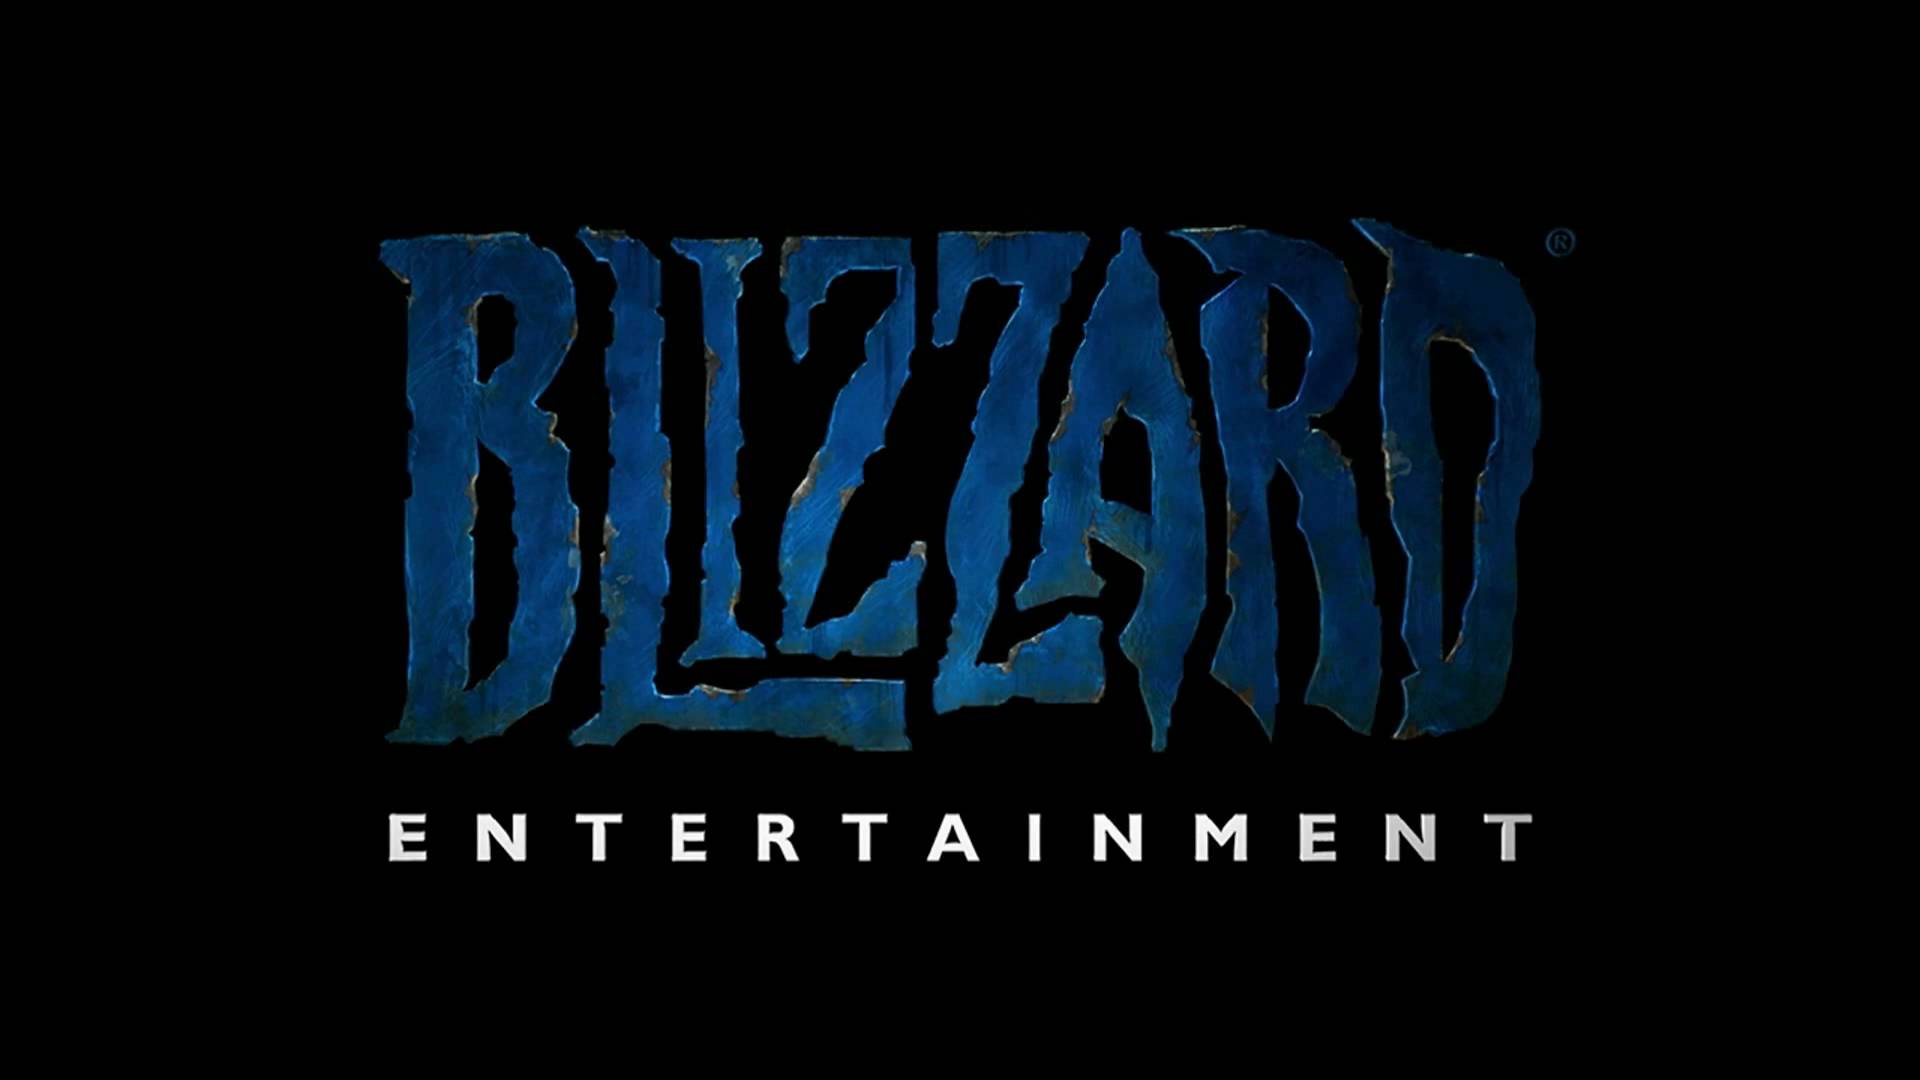 Blizzard เผยกำลังสร้างเกมใหม่ !? พร้อมใส่ไอเดียเจ๋งๆ เข้าไปมากมาย